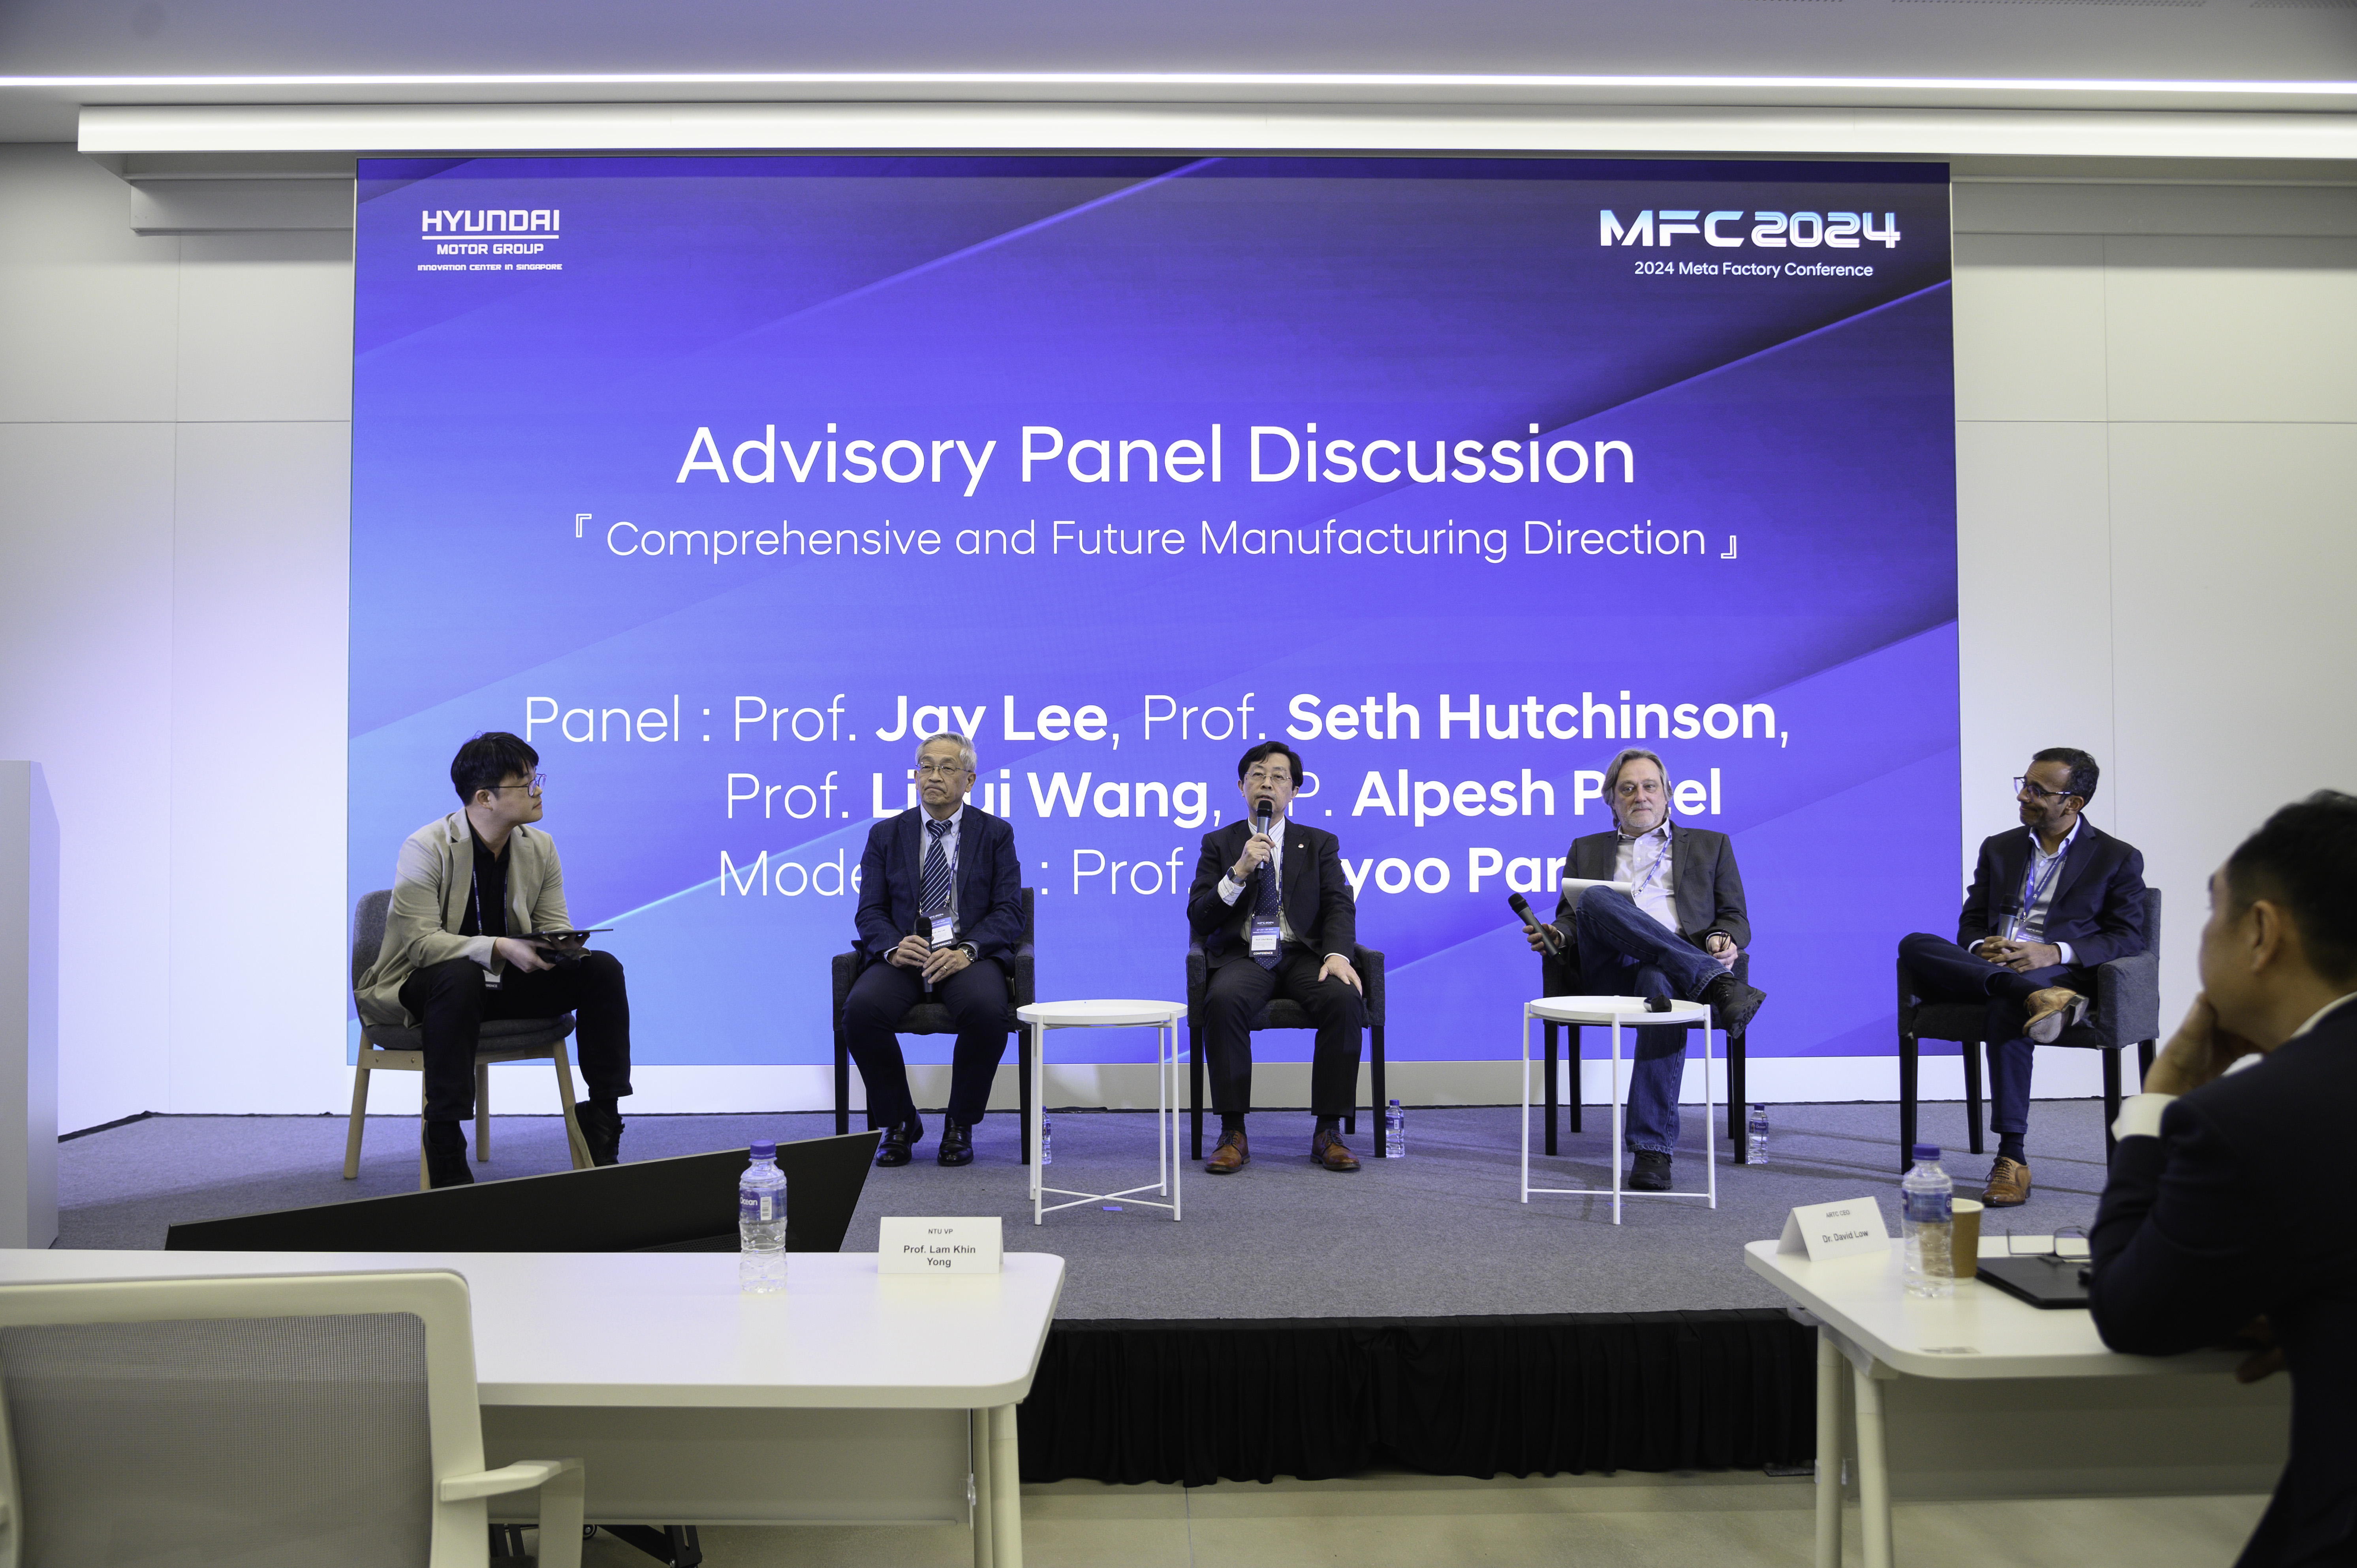 #MFC 2024 #Meta Factory Conference #HMGICS #Hyundai